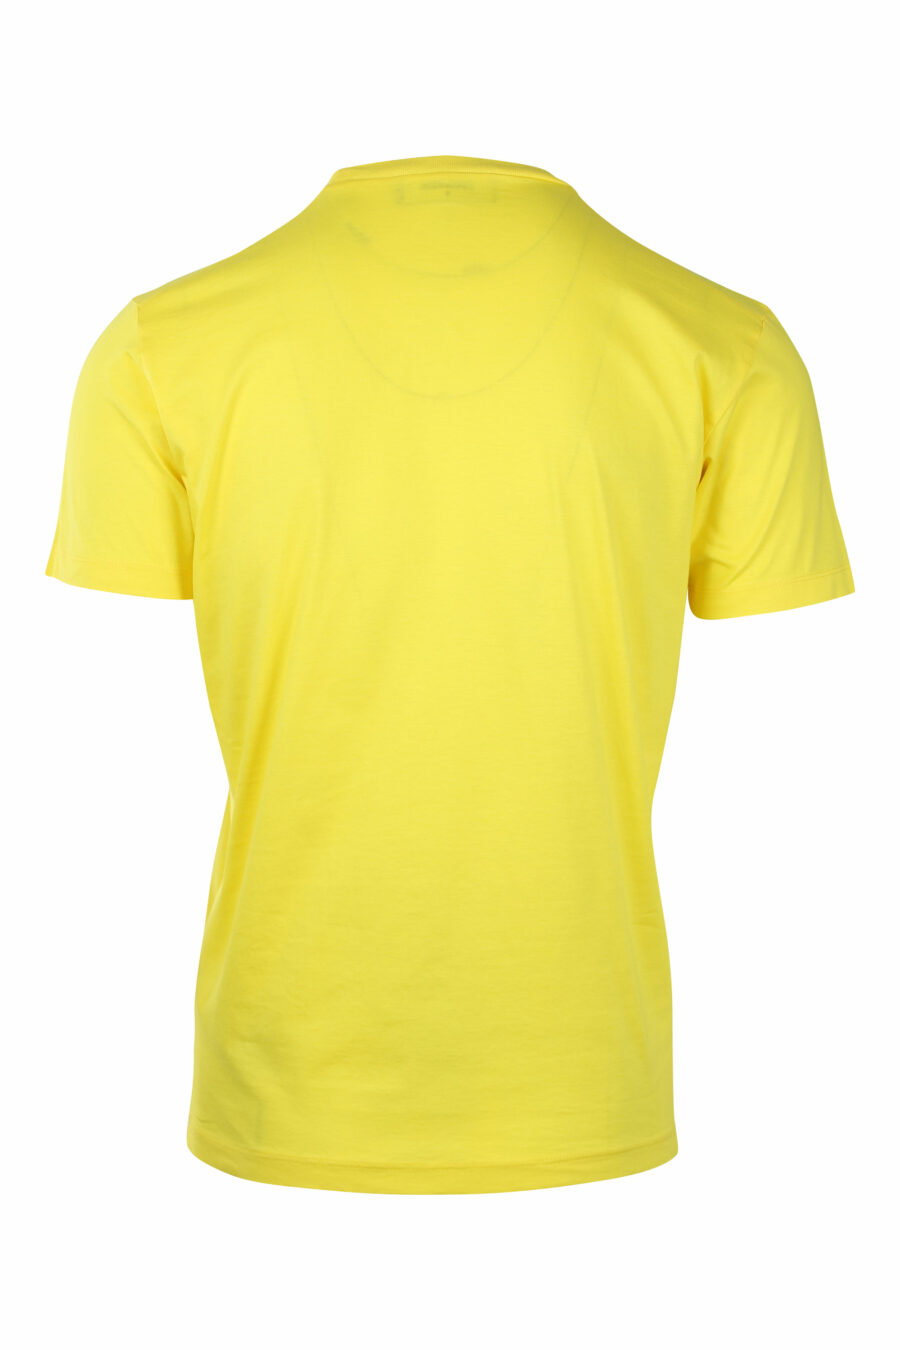 Yellow T-shirt with white double "icon" logo - IMG 1406